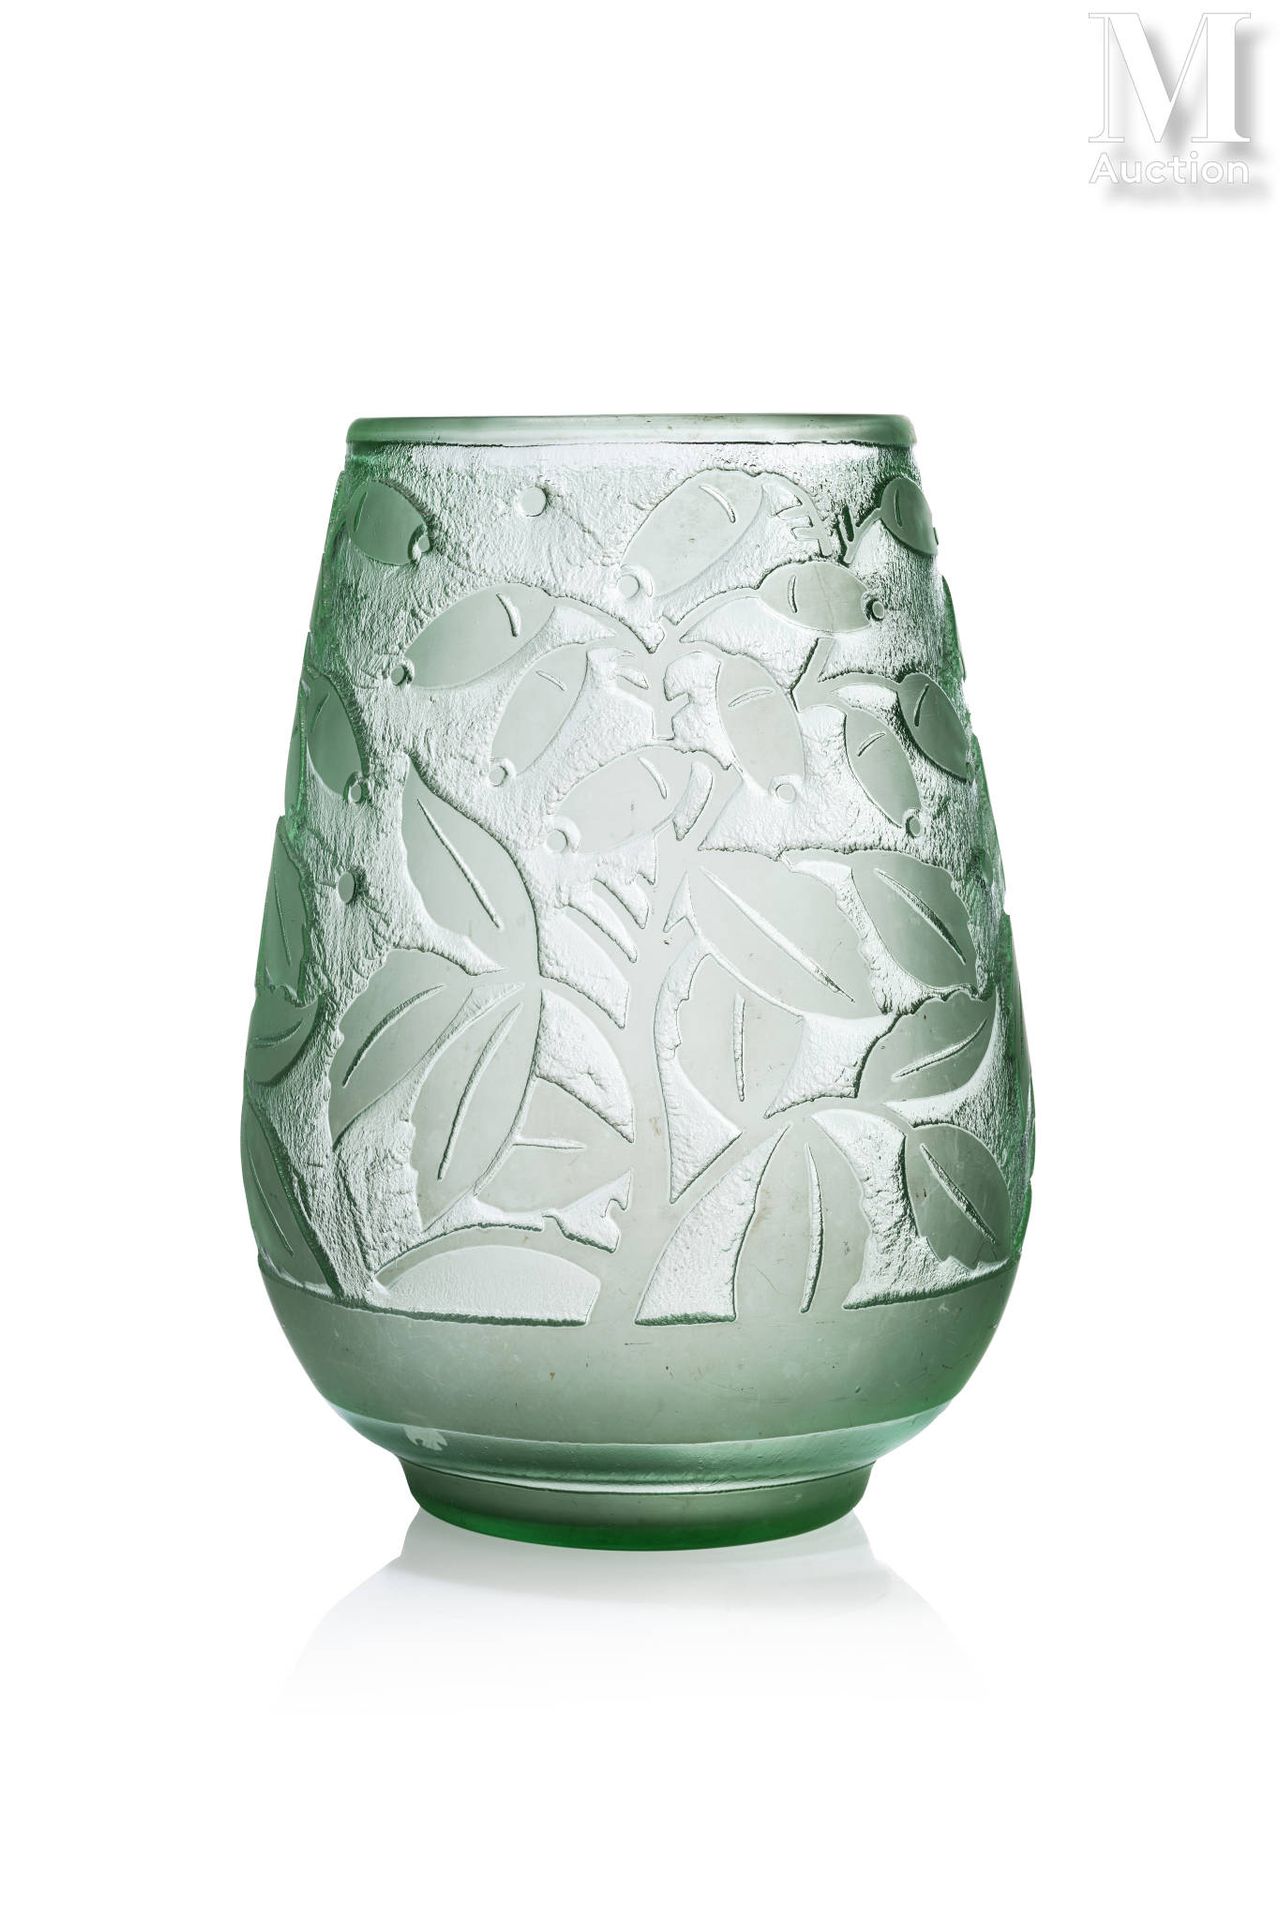 DAUM - Nancy 一个绿色有色玻璃卵形花瓶，上面有酸蚀的风格化花卉图案的装饰。

署名 "Daum # Nancy France"。

高：35厘米，深&hellip;